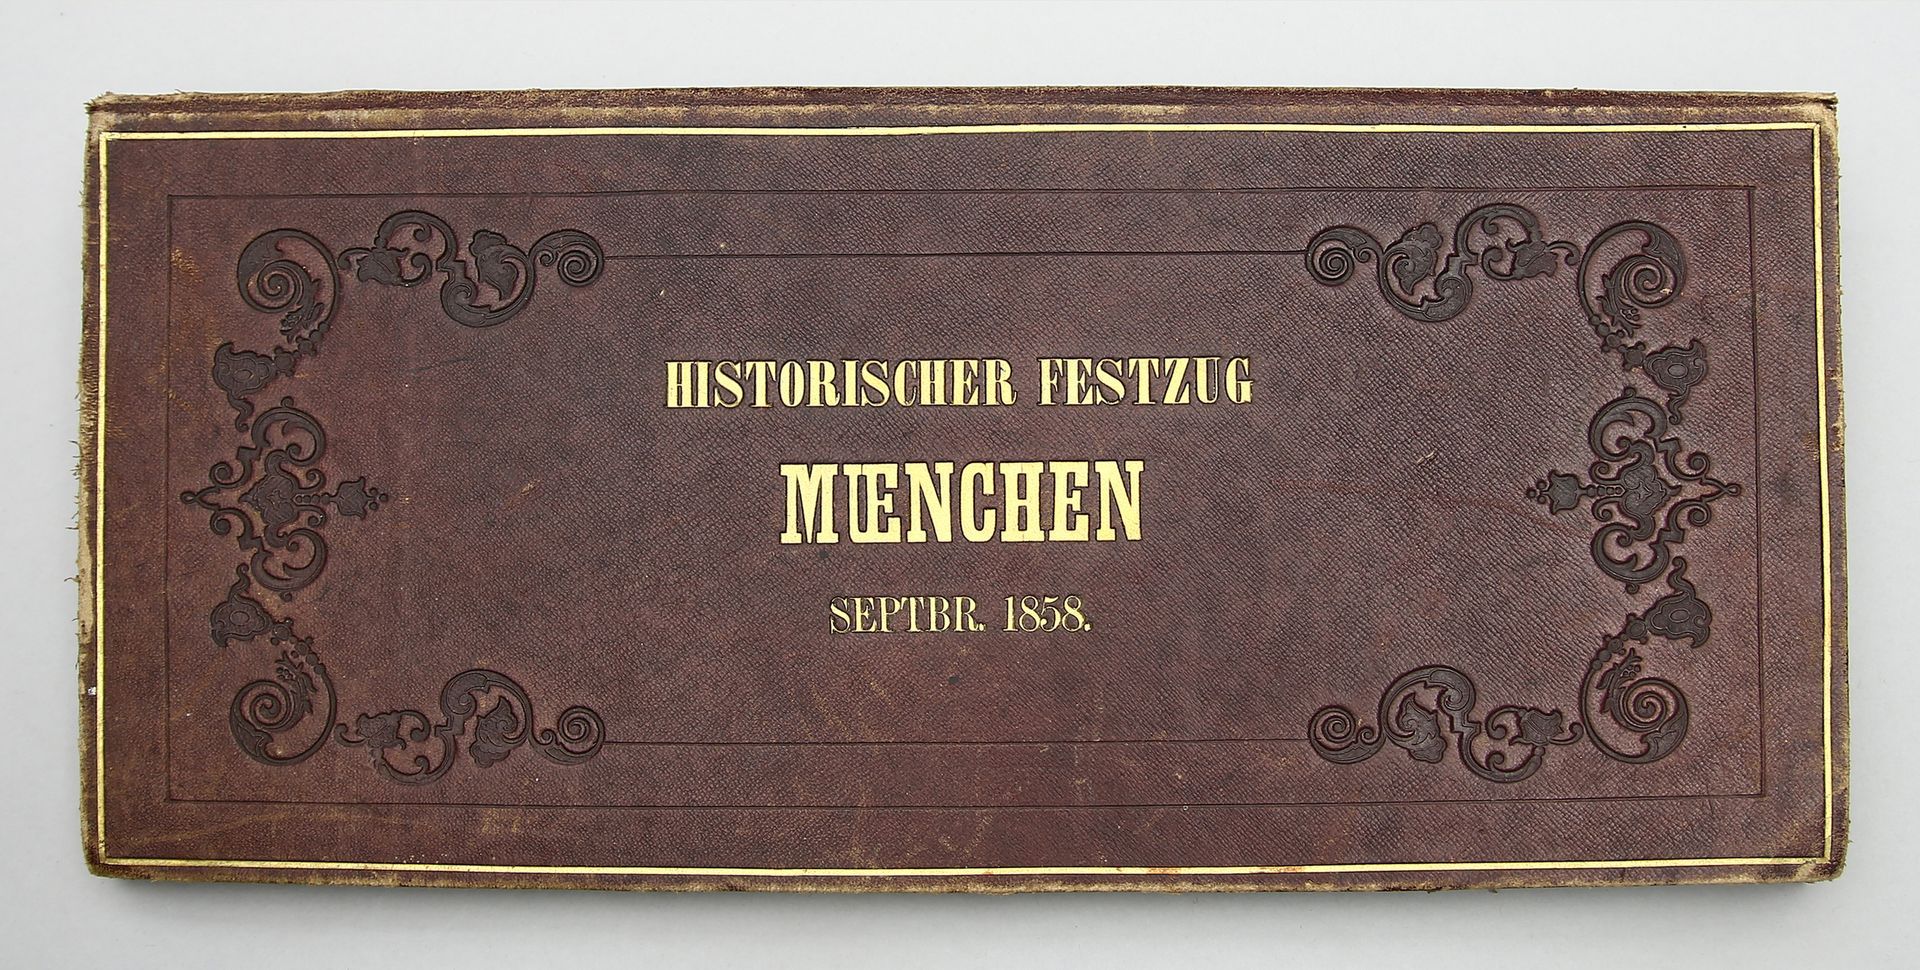 "Erinnerung an den historischen Festzug München September 1858". - Image 4 of 4